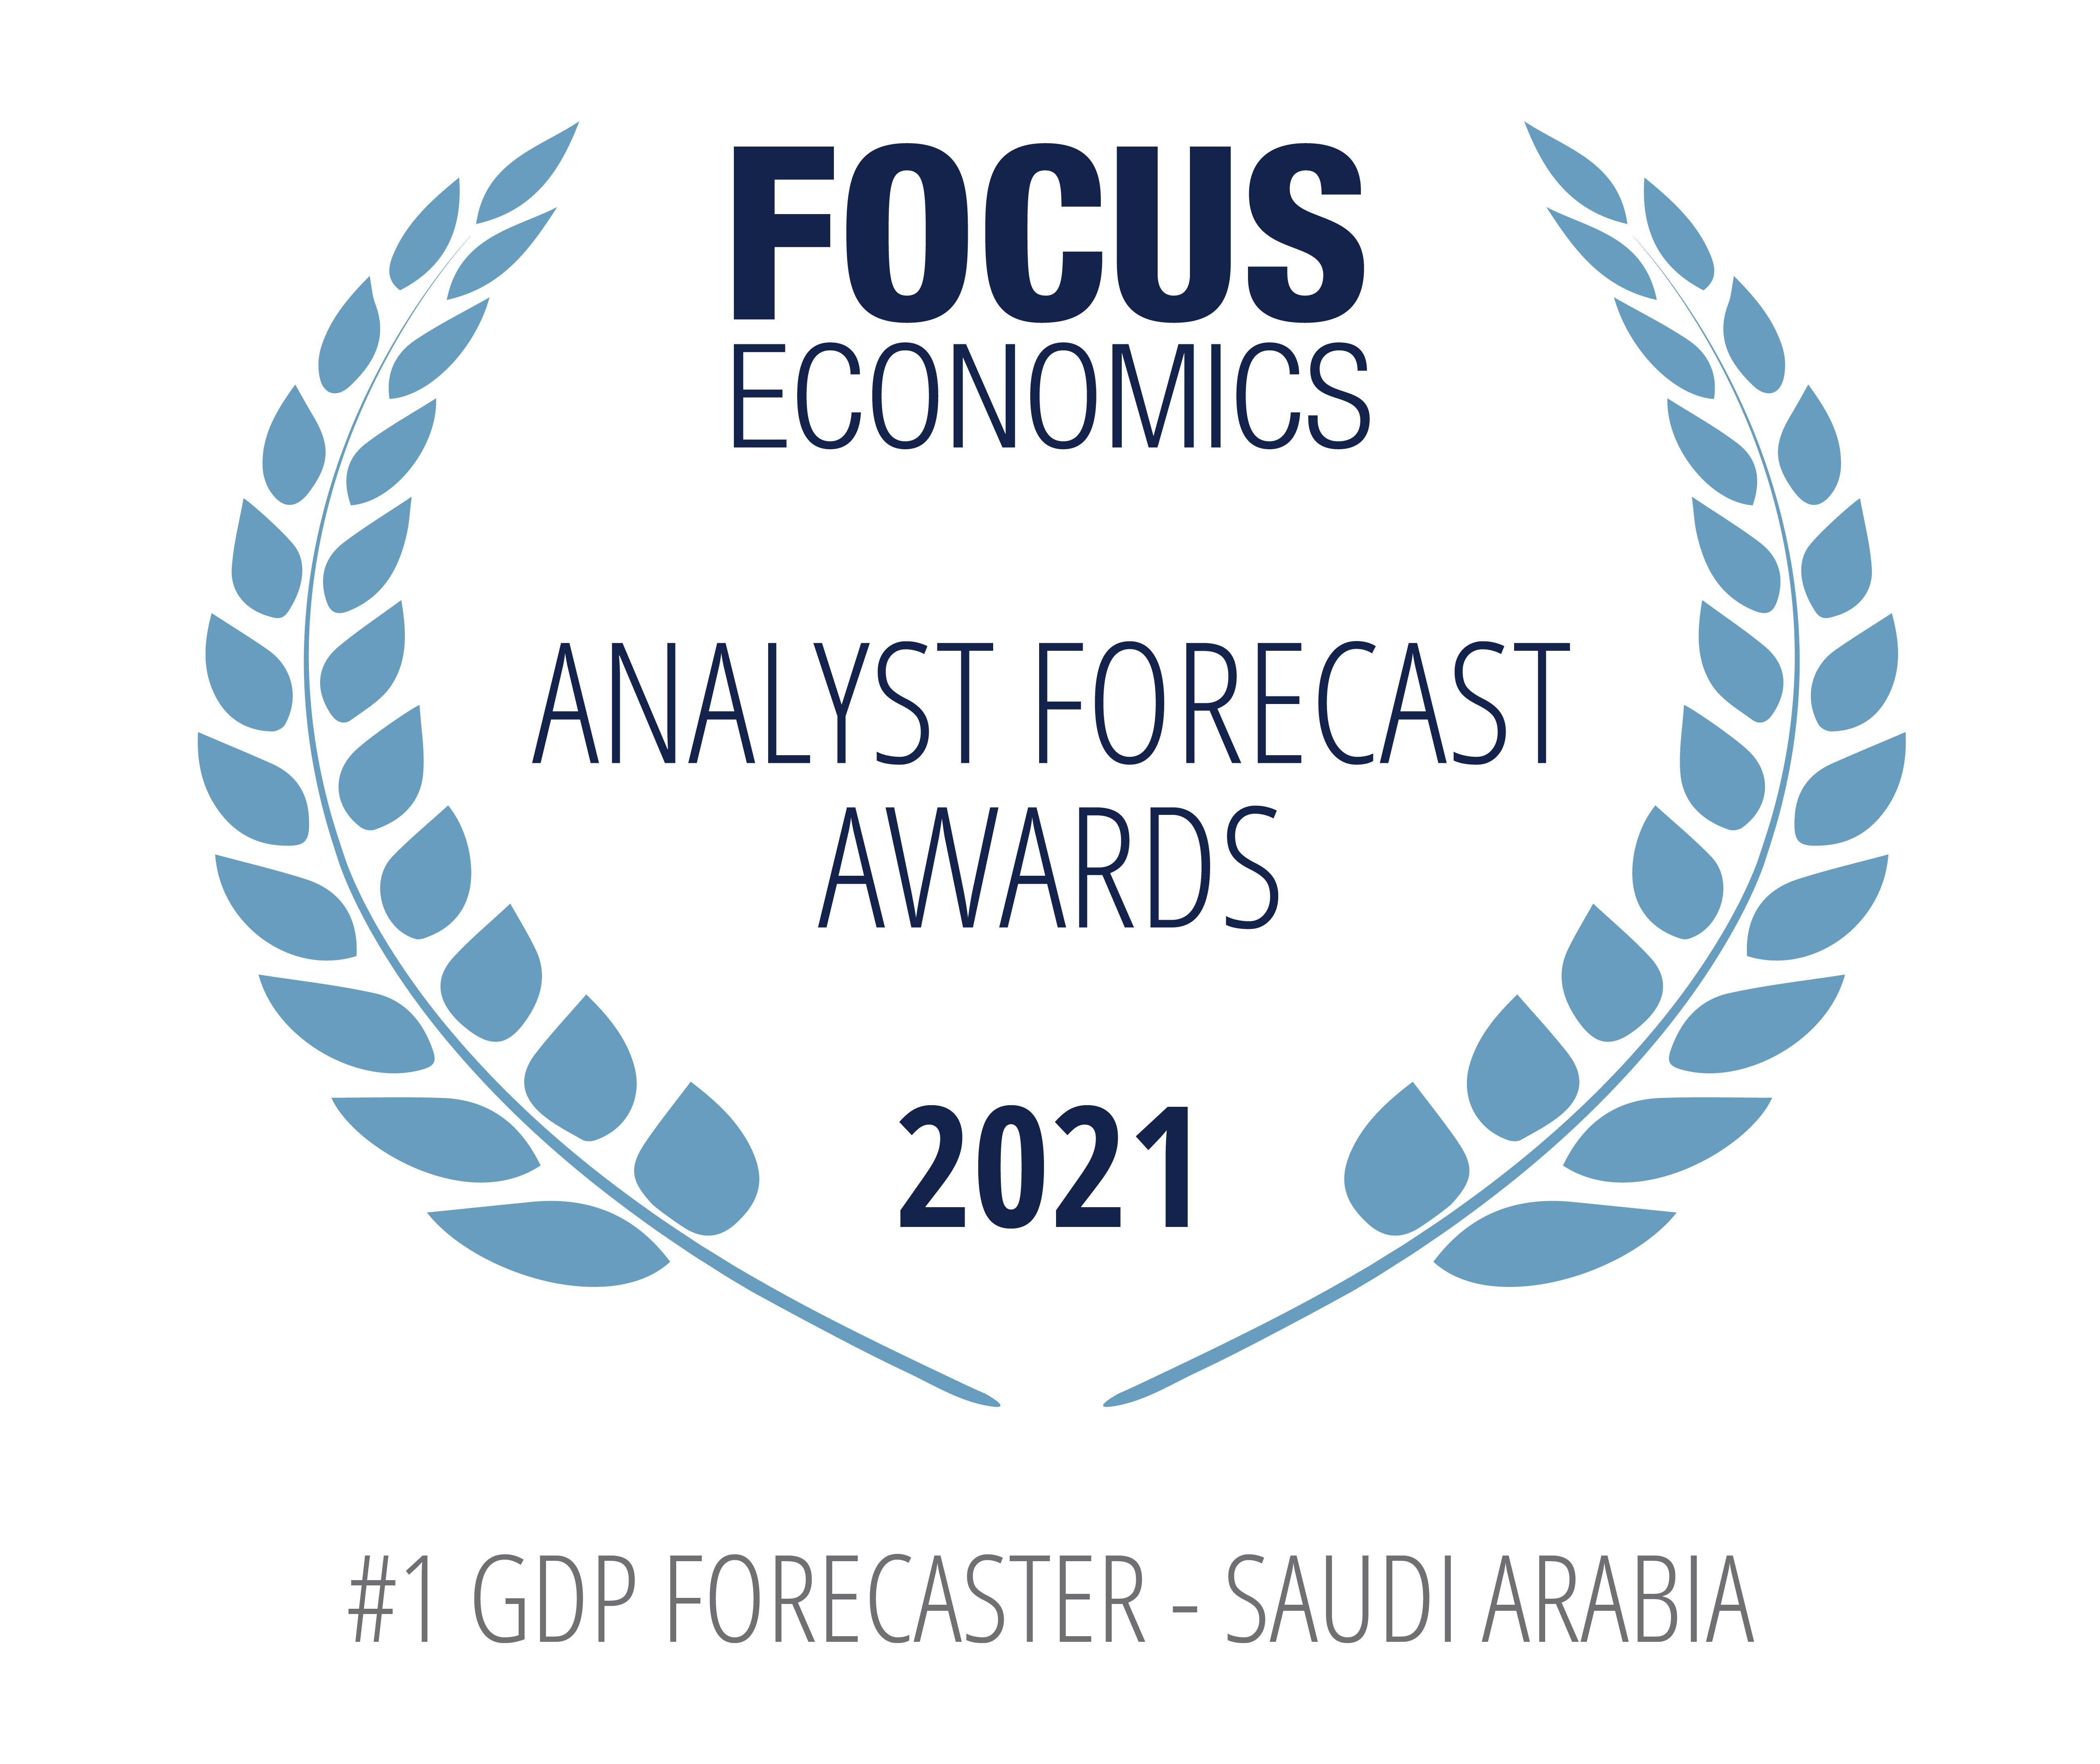 #1 GDP Forecaster – Saudi Arabia FocusEconomics Analyst Forecast Awards, 2021